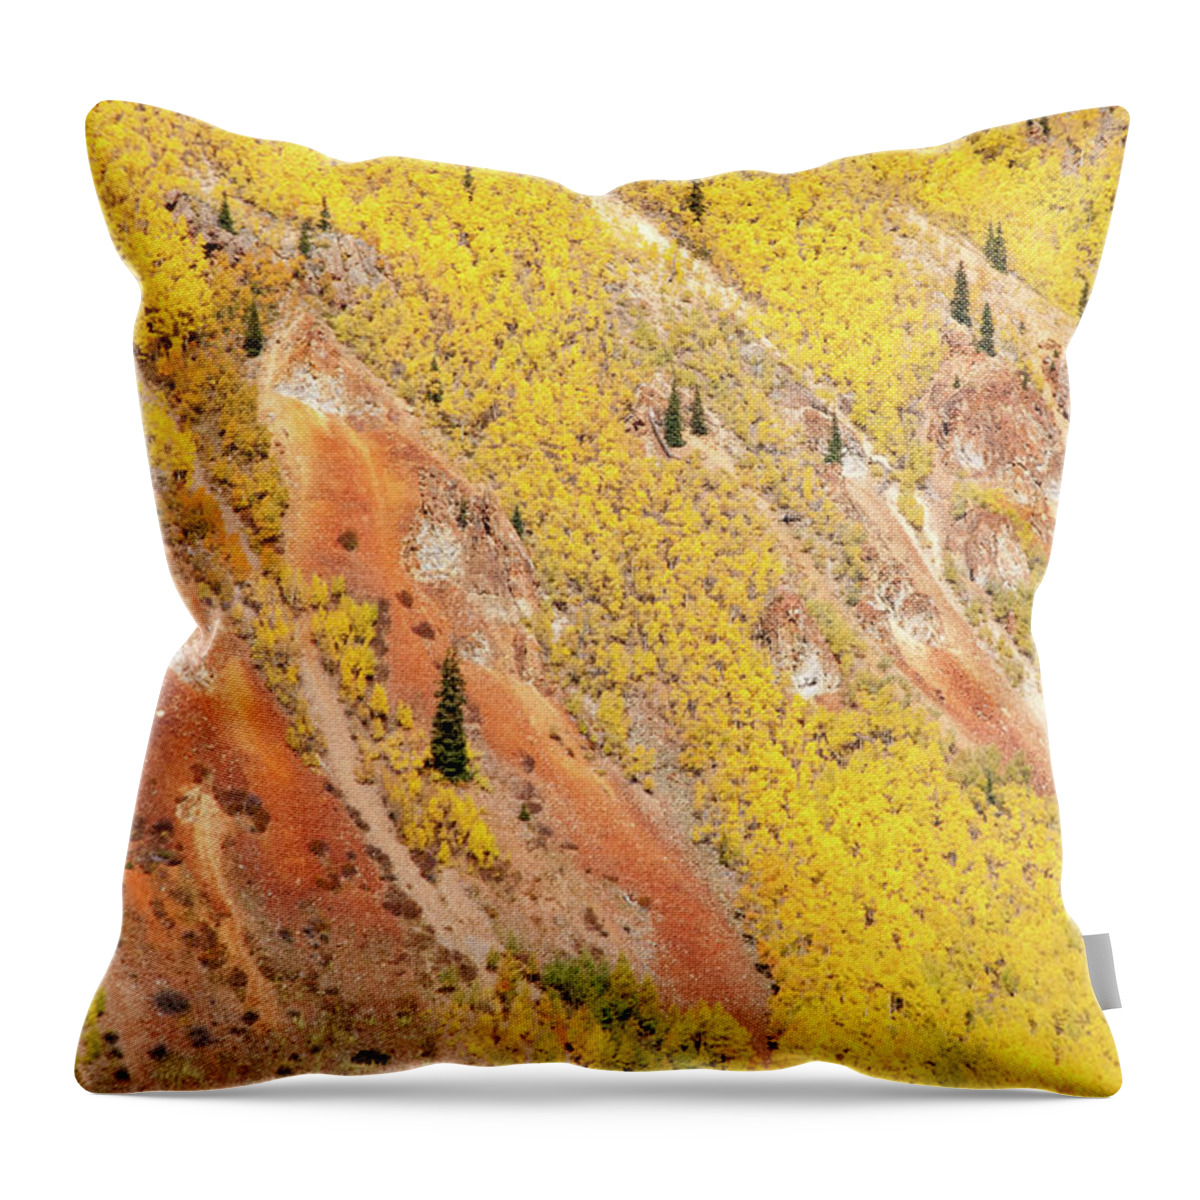 Colorado Throw Pillow featuring the photograph Aspen Mountainside by Steve Stuller